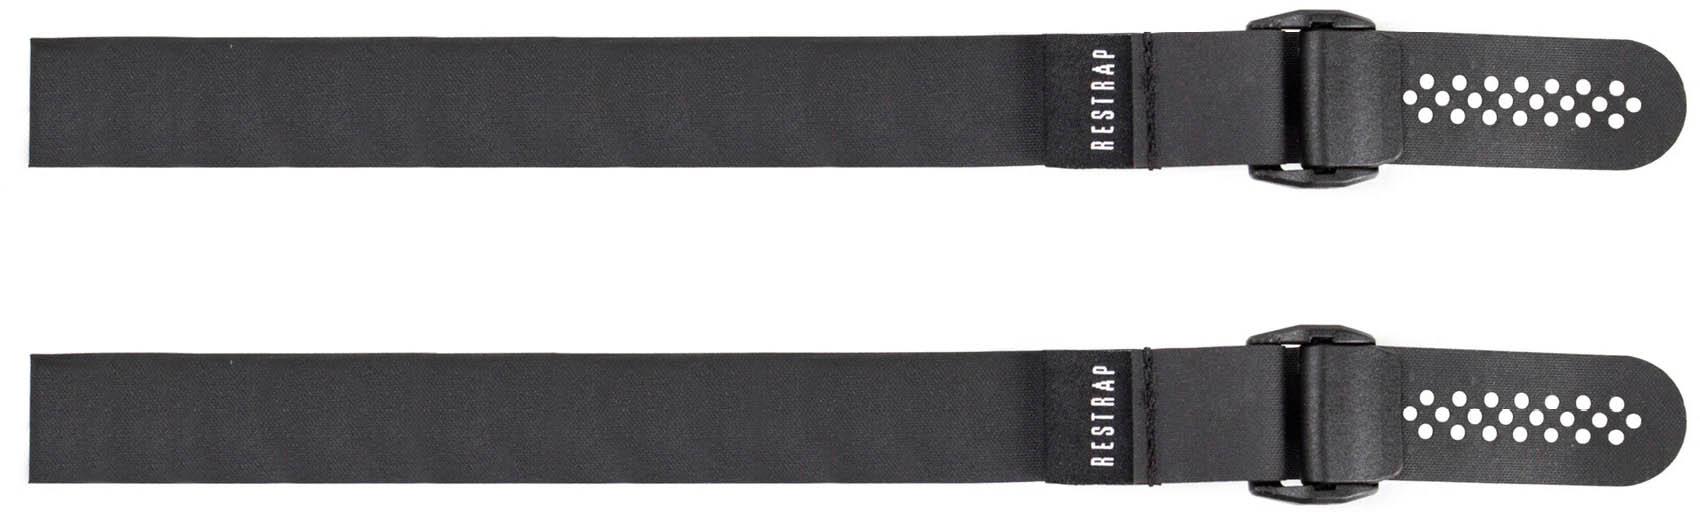 Restrap Fast Frame Straps (medium)  Black